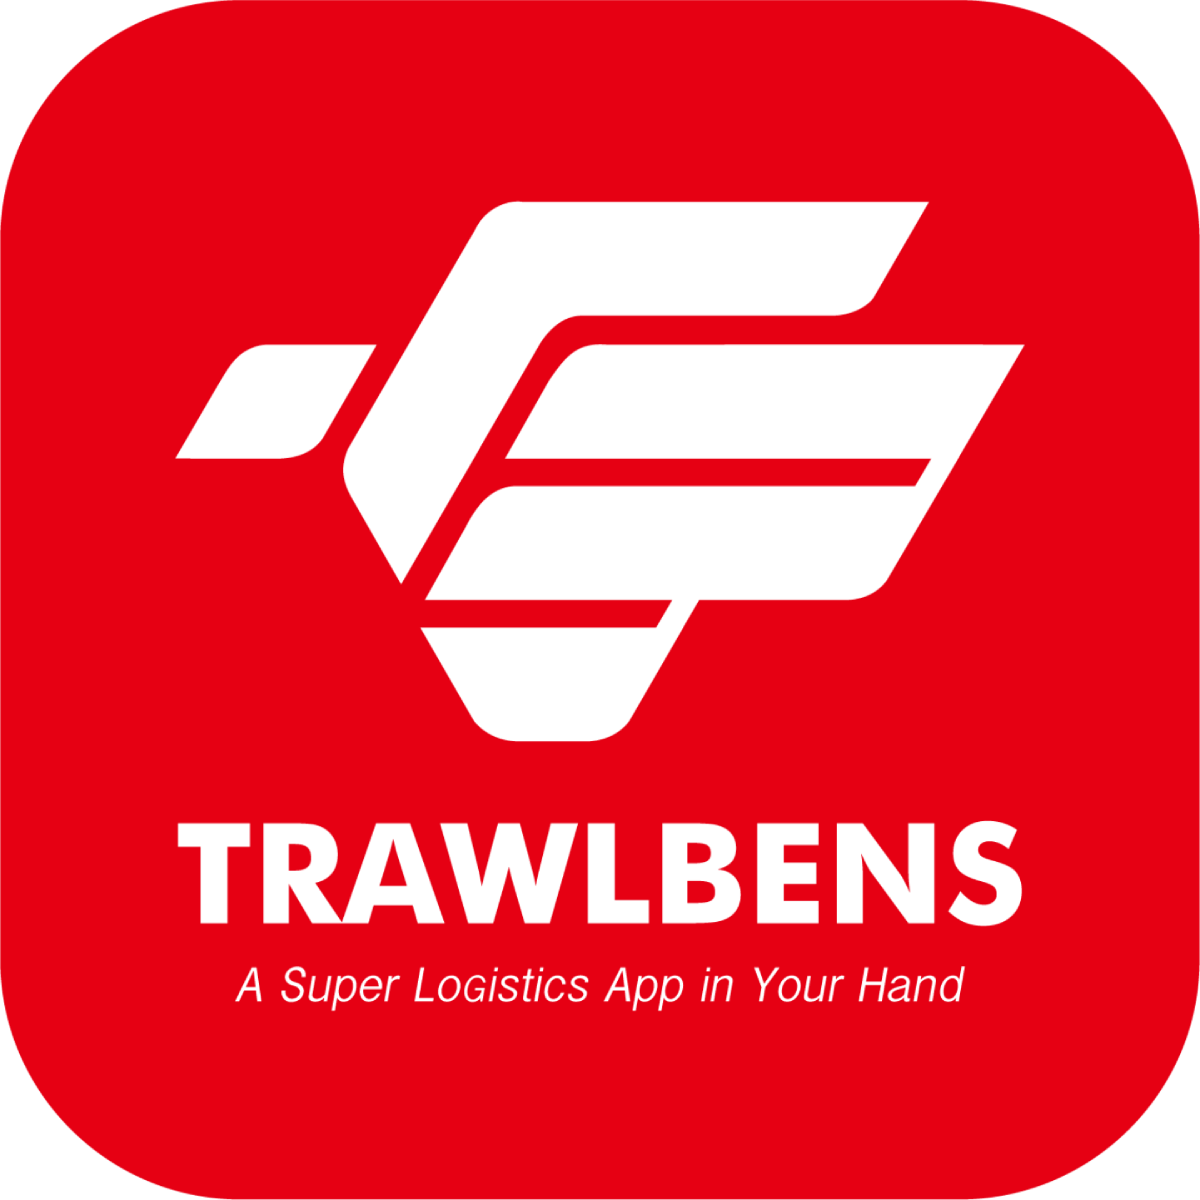 Pt. Trawlbens Teknologi Anak Indonesia